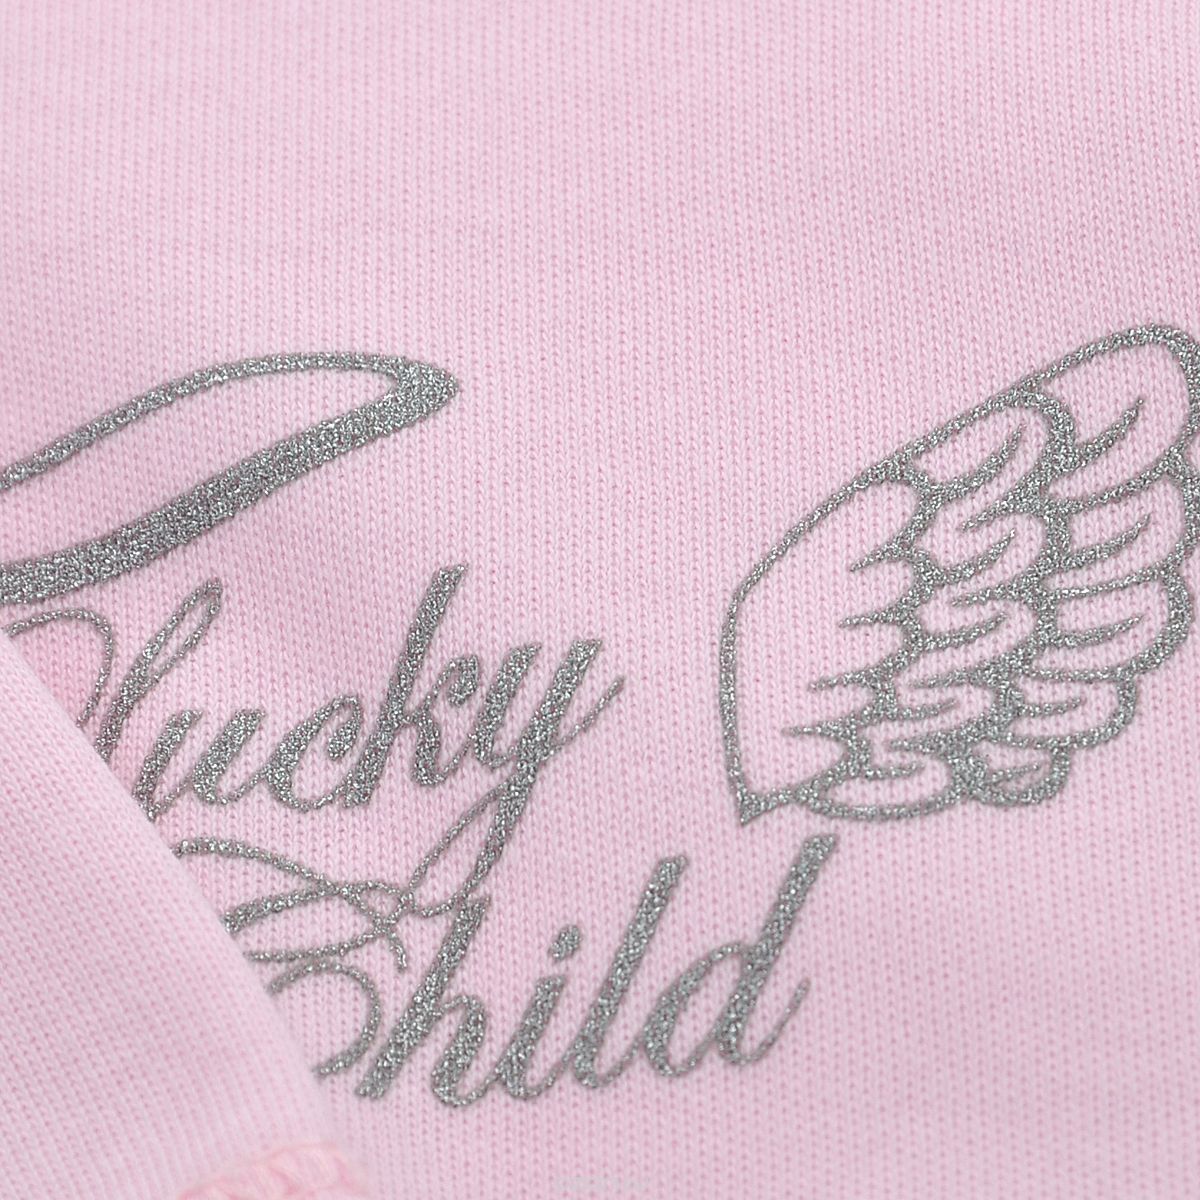   Lucky Child , : . 17-1.  62/68